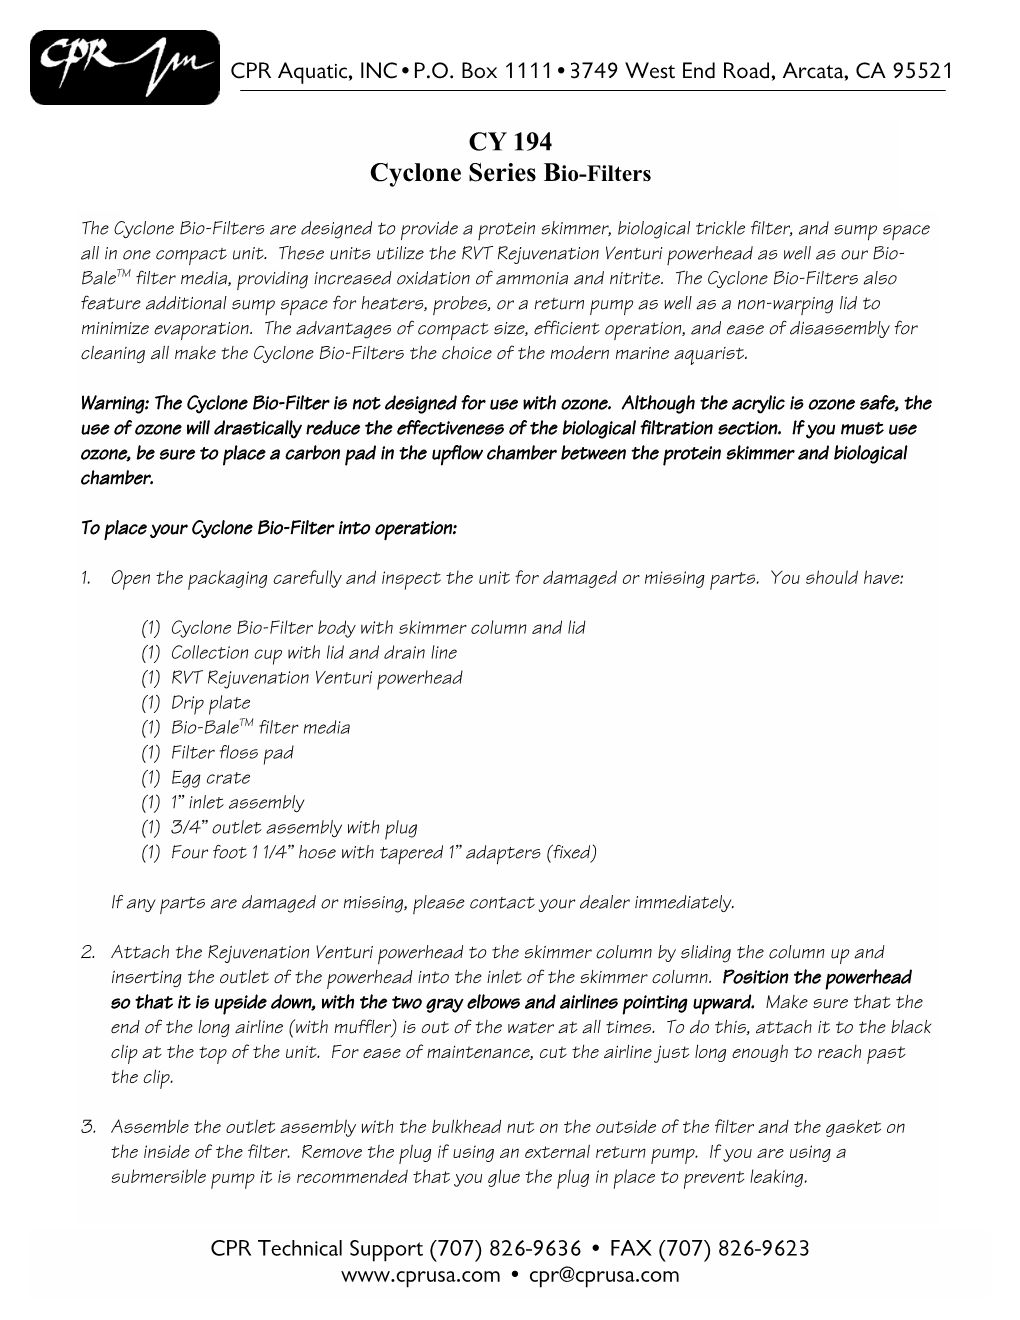 CY 194 Cyclone Series Bio-Filters